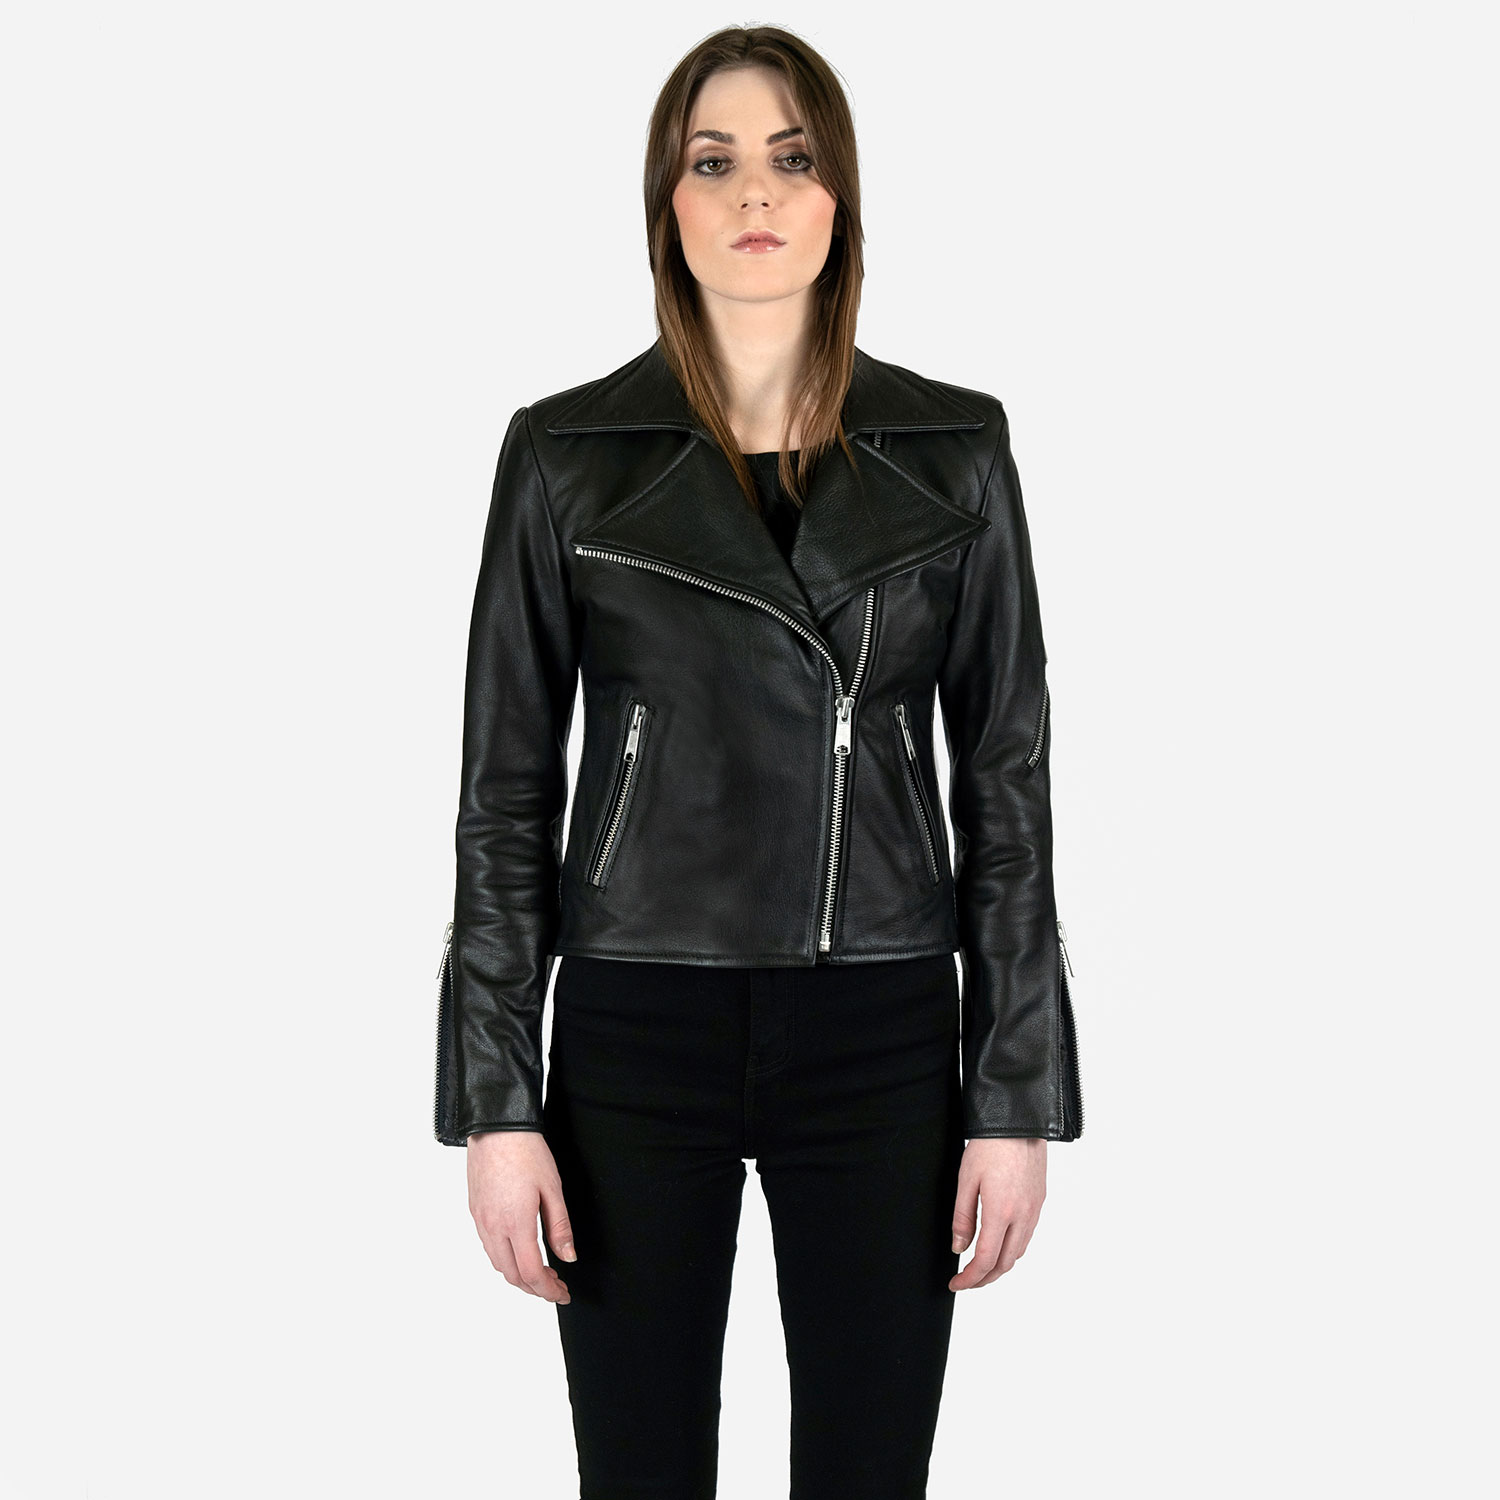 Flash - Leather Jacket (Size XS, S, M, L, XL, 2XL, 3XL, 4XL